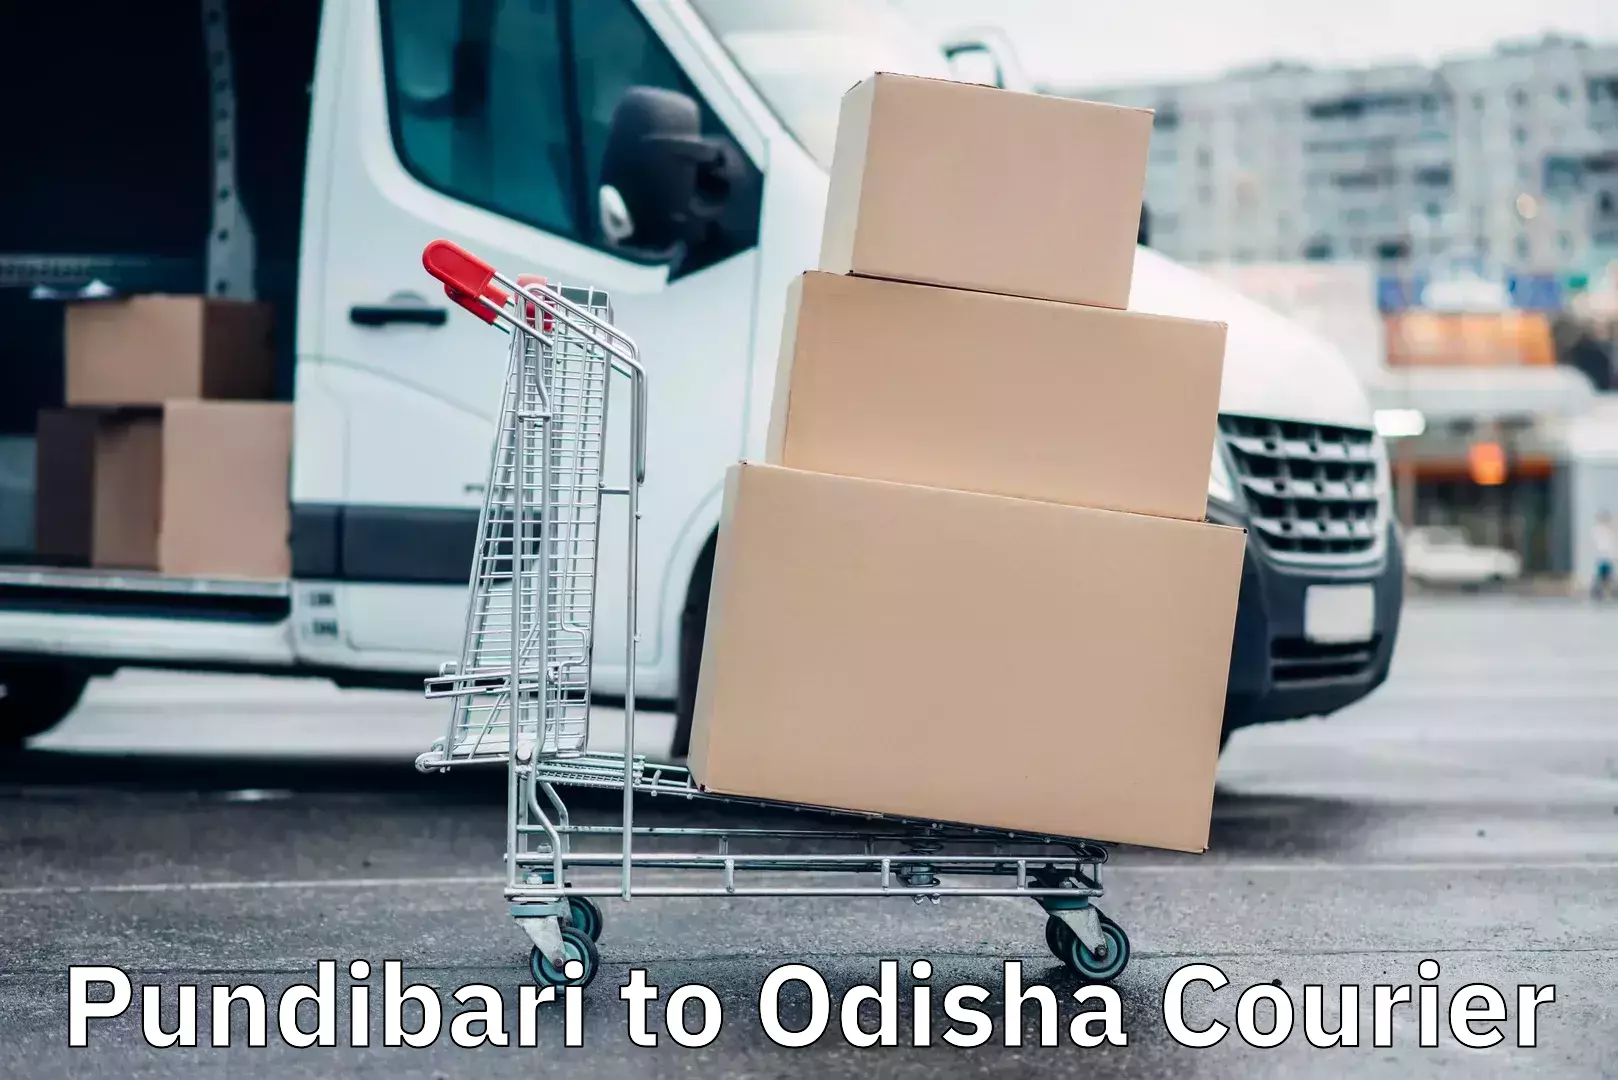 Nationwide delivery network Pundibari to Odisha